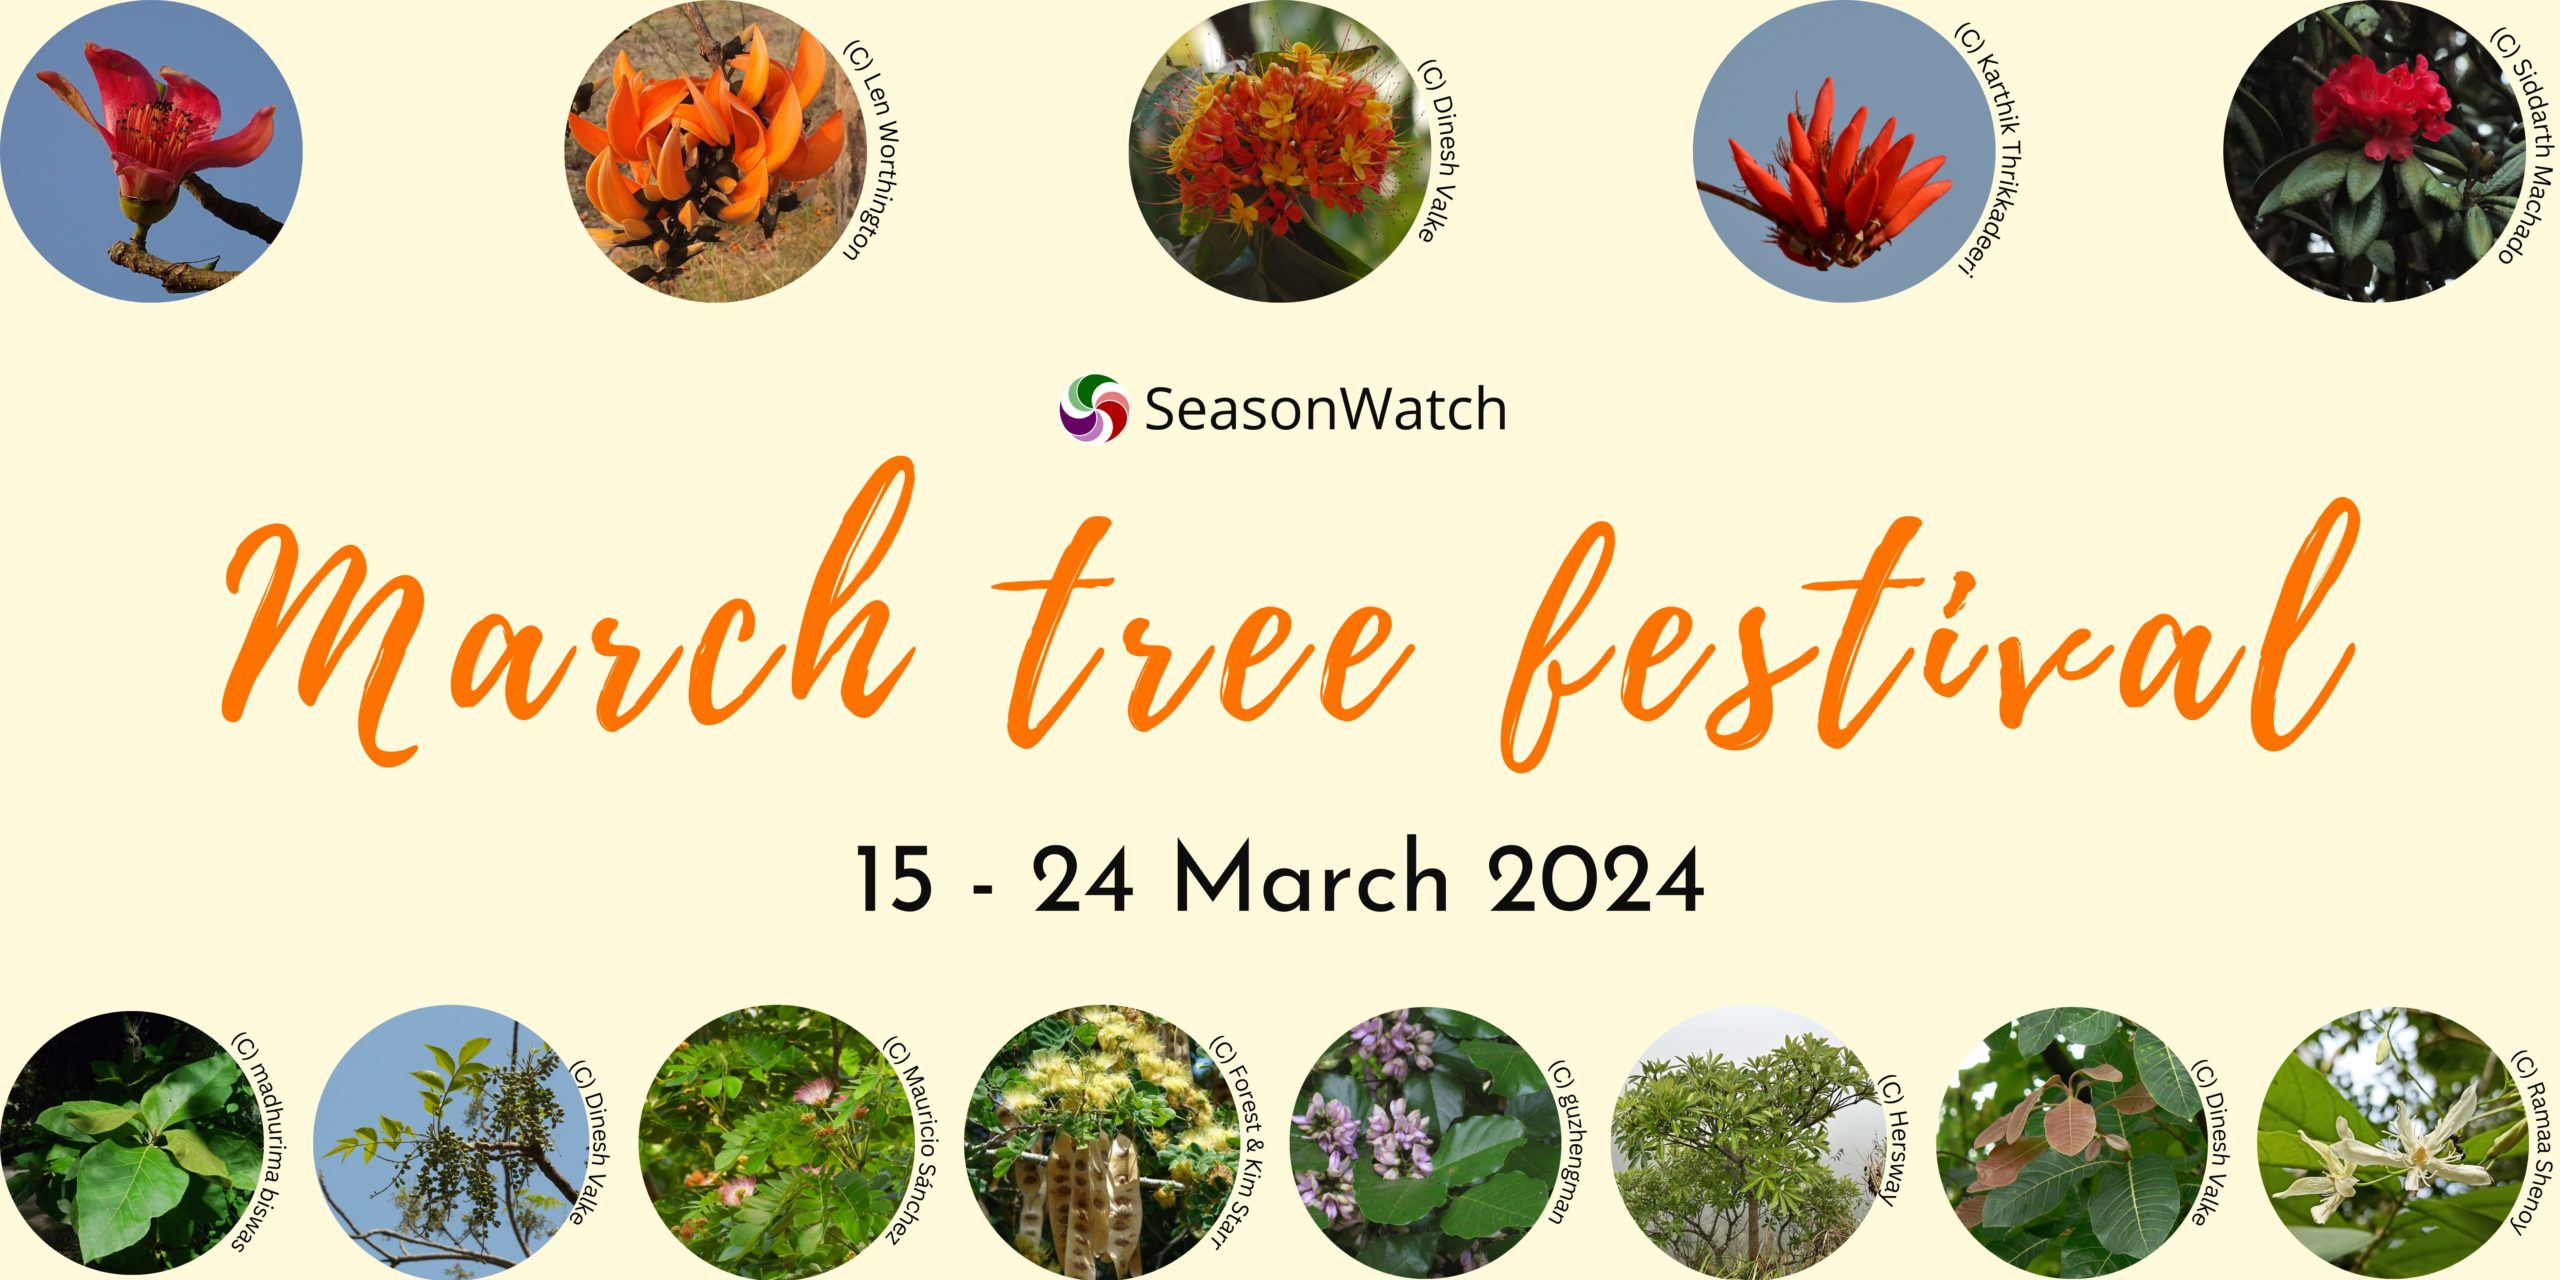 March Tree Festival 2024 : SeasonWatch